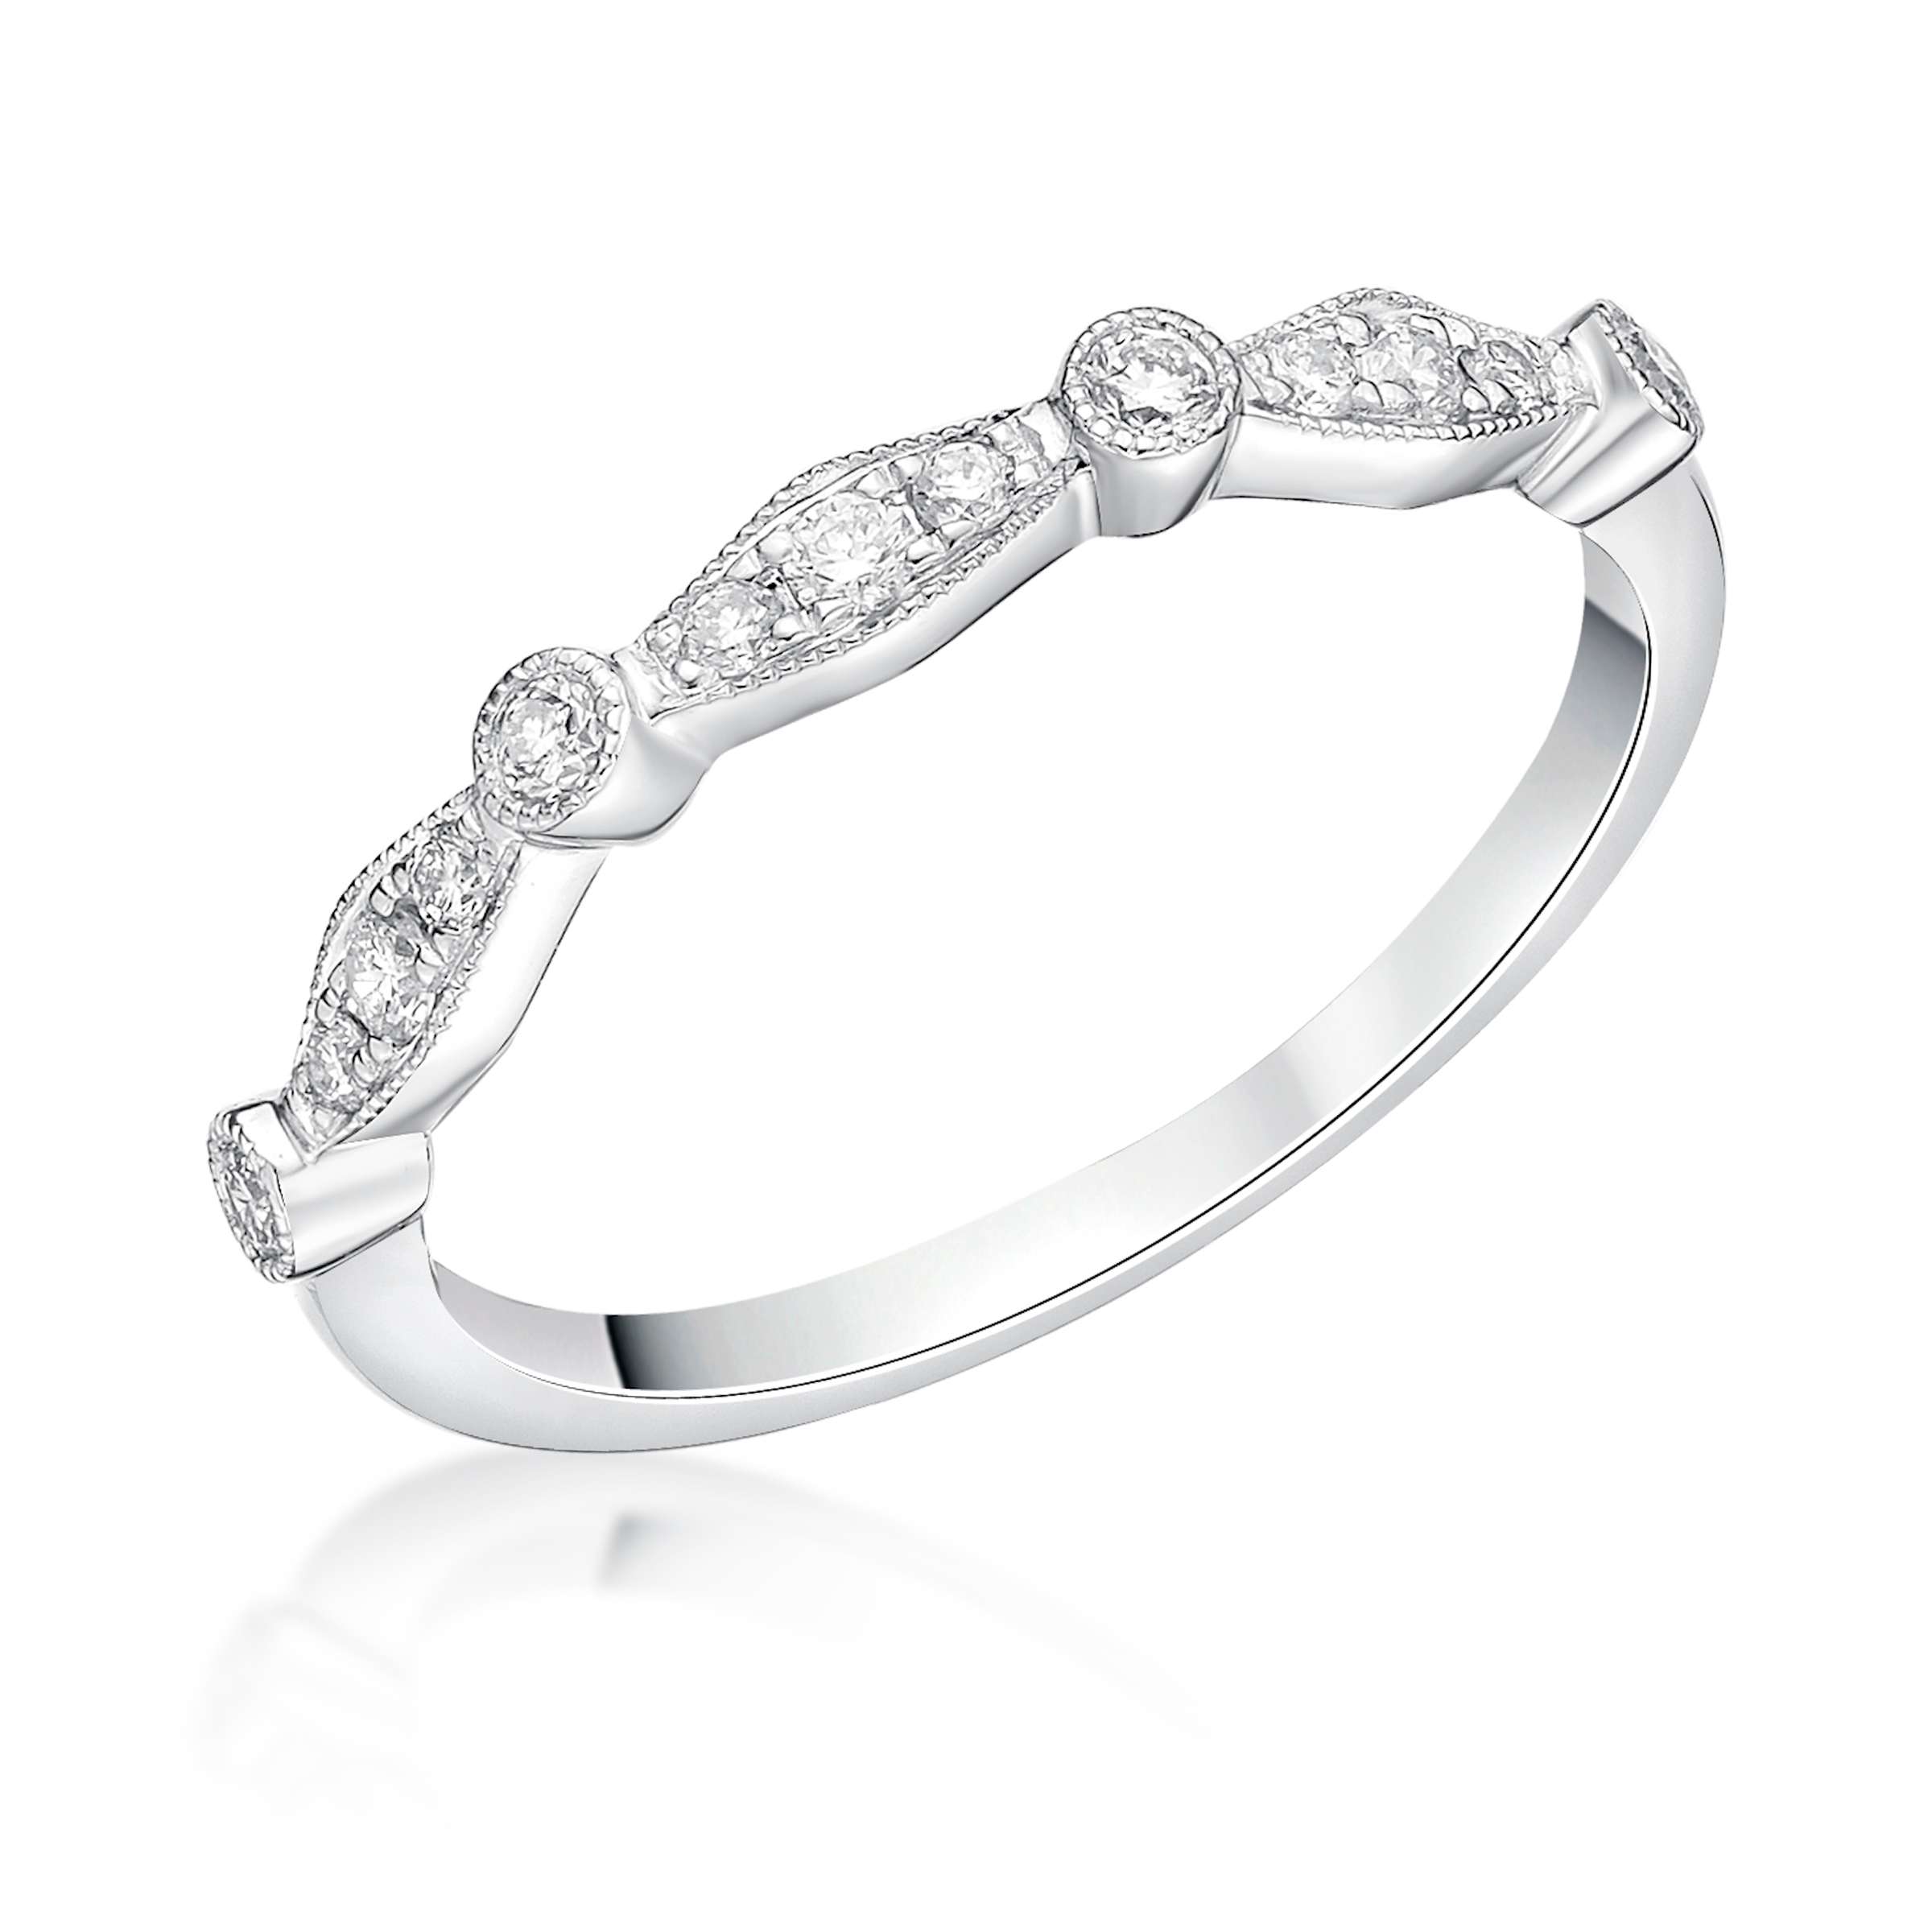 VINTAGE INSPIRED ROUND DIAMOND WEDDING ETERNITY RING